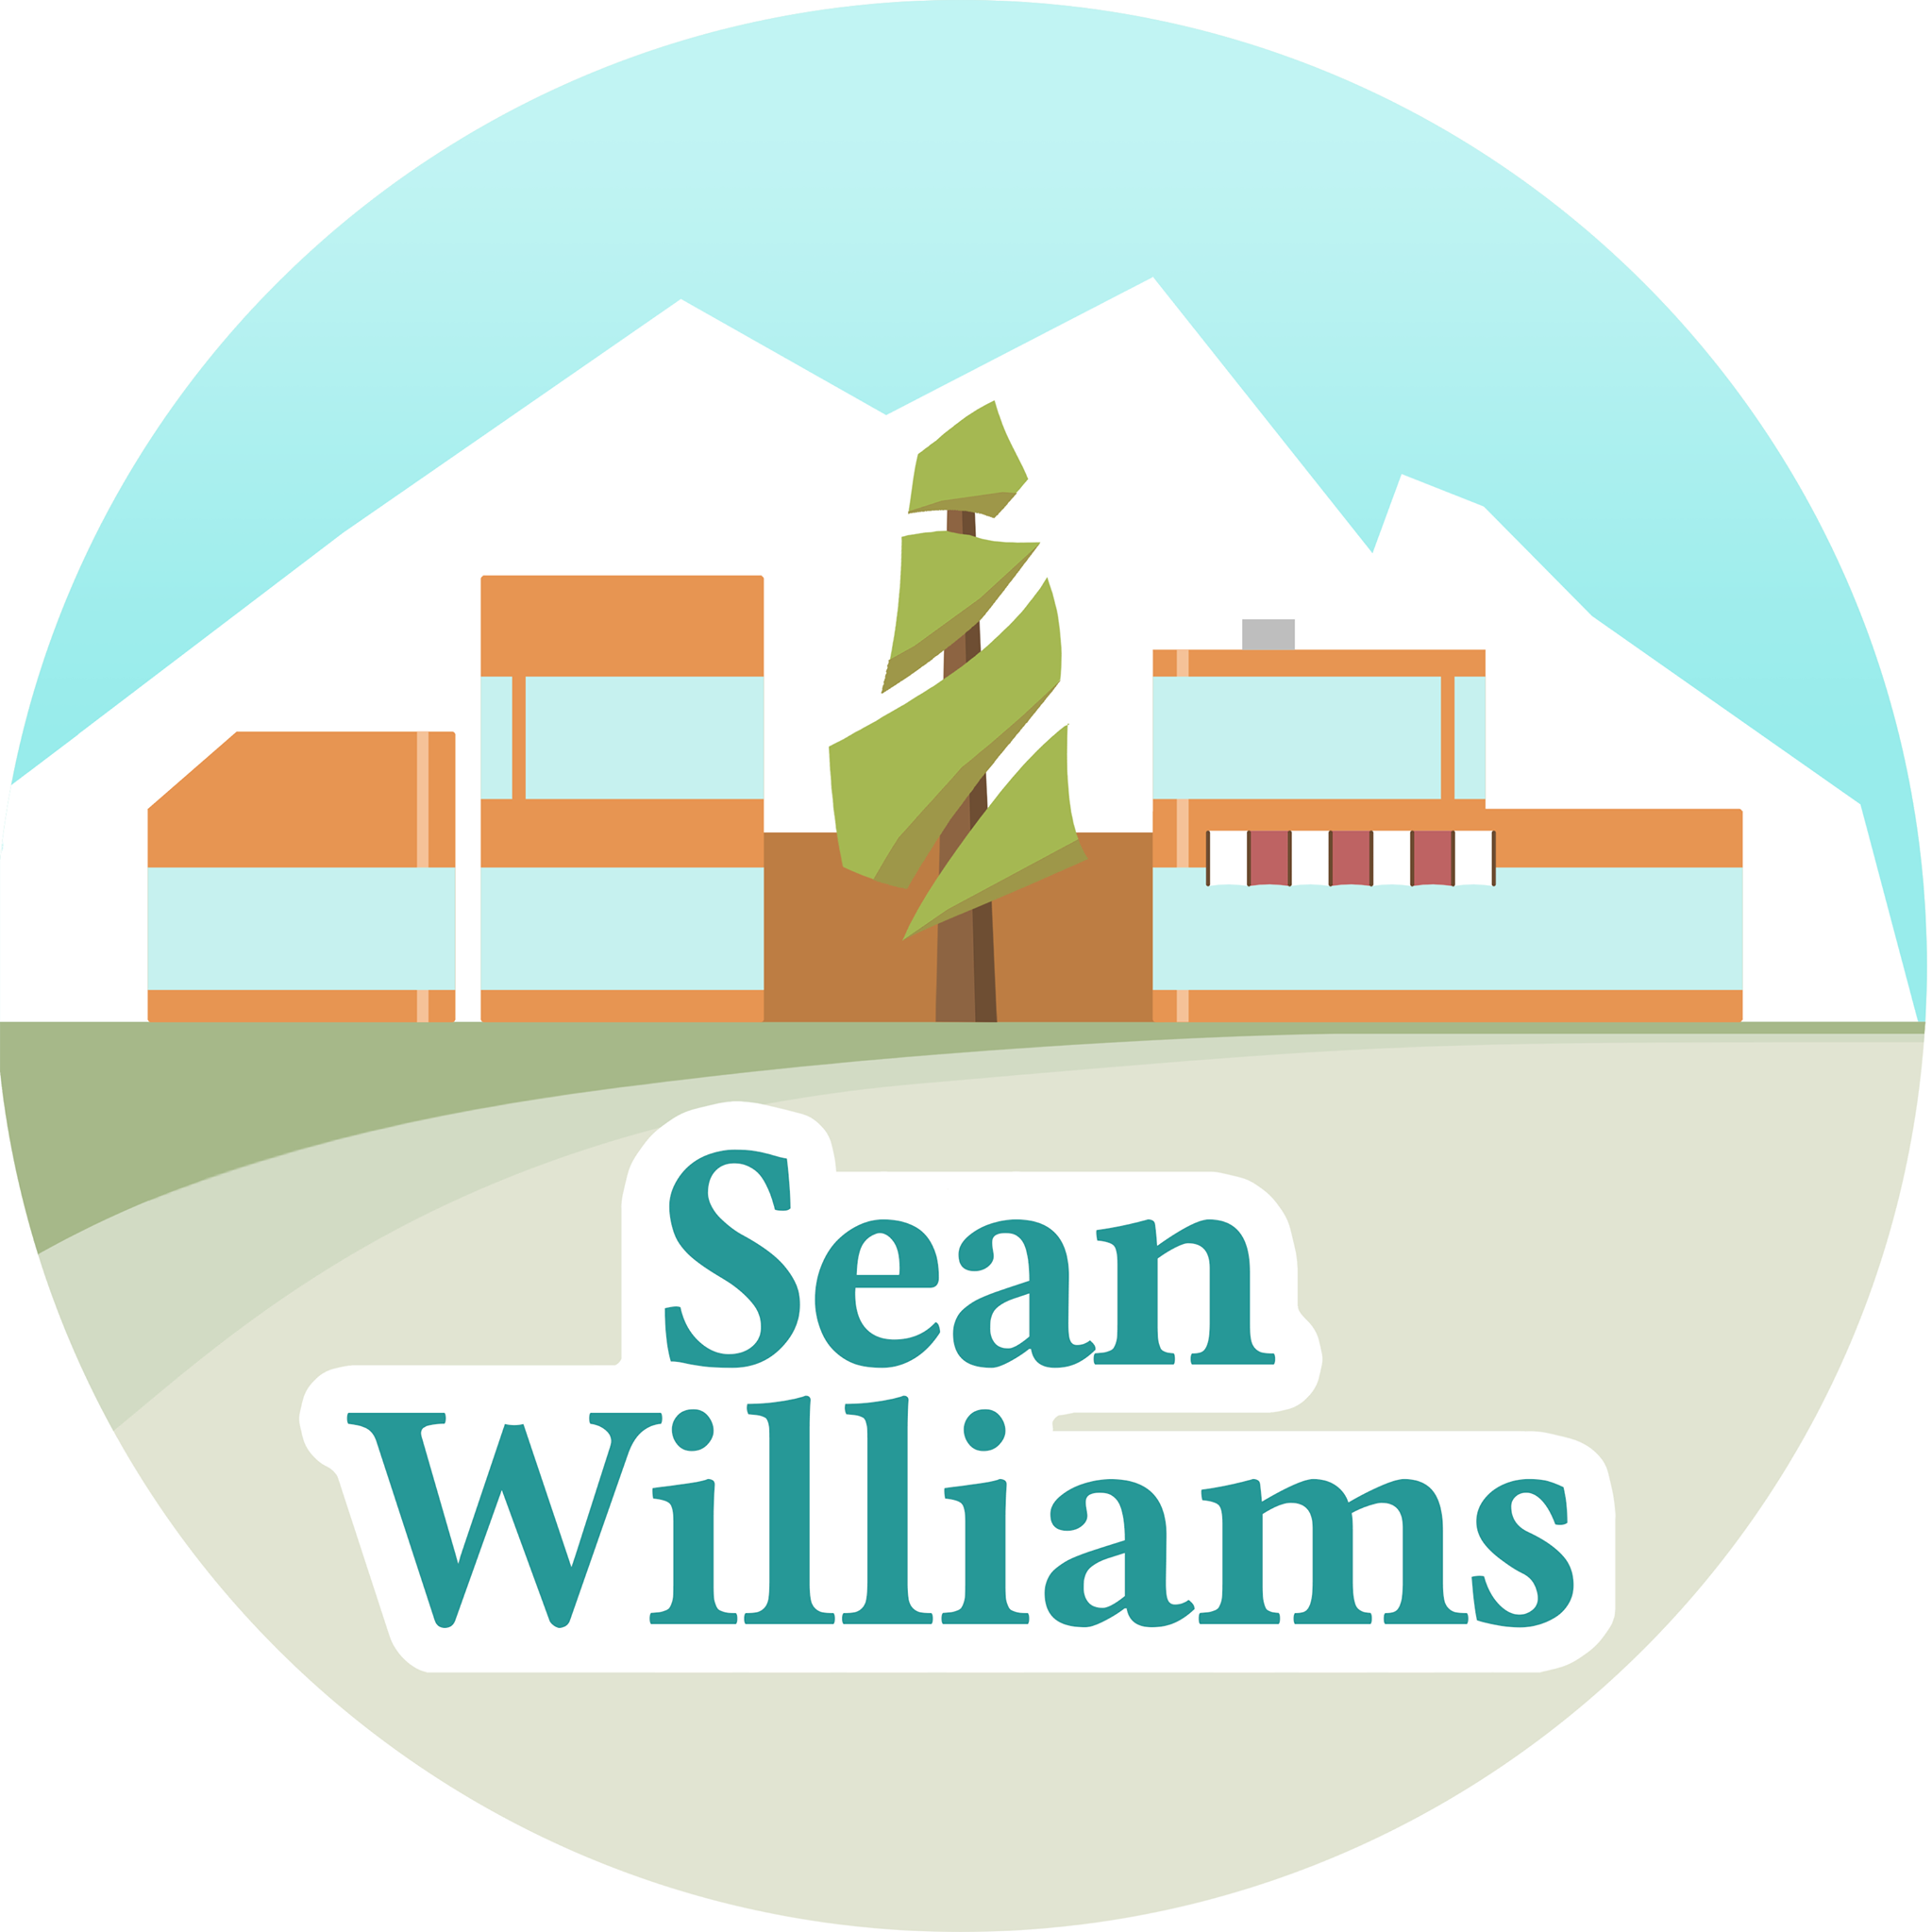 Friends of Sean Williams logo